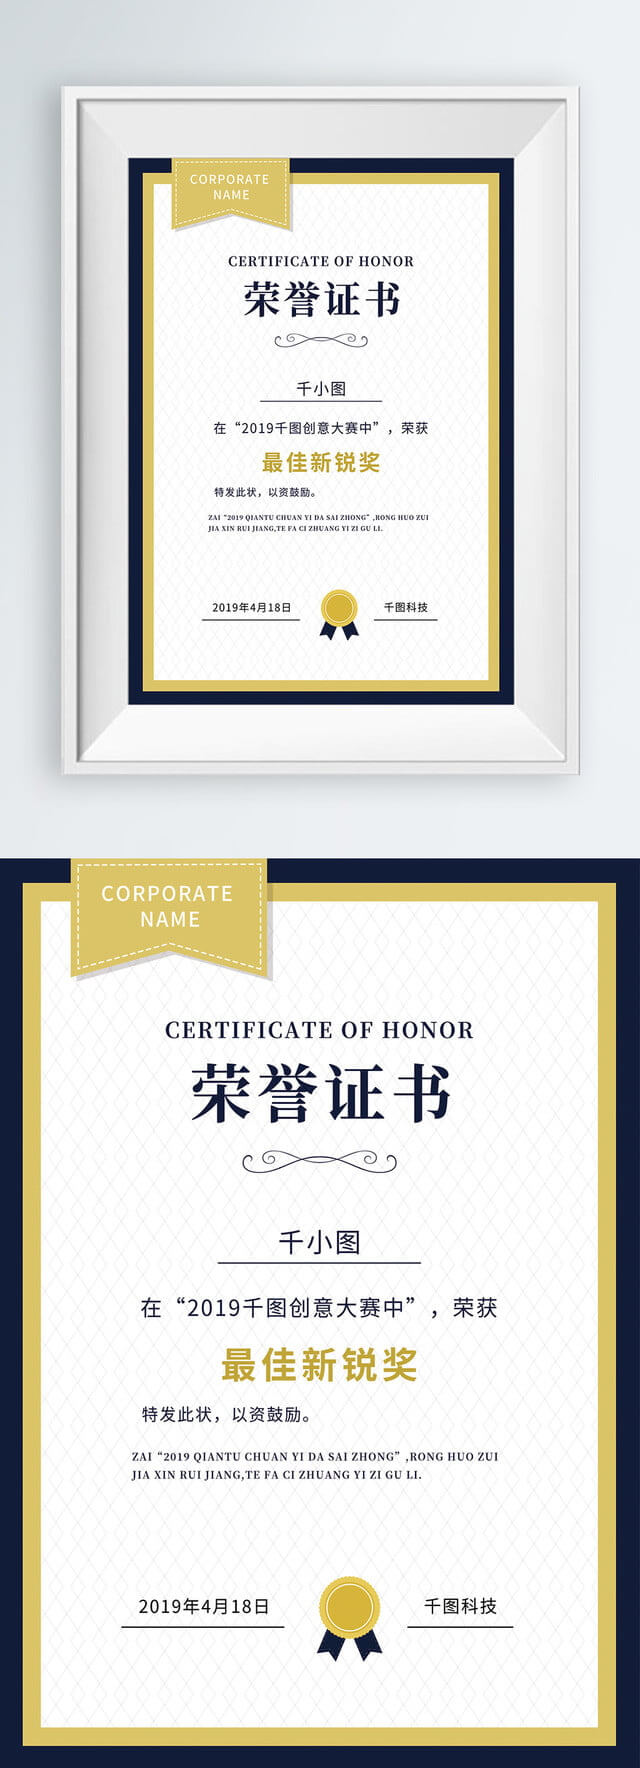 Certificate Authorization Certificate Certificate Of Honor With Regard To Certificate Of Authorization Template